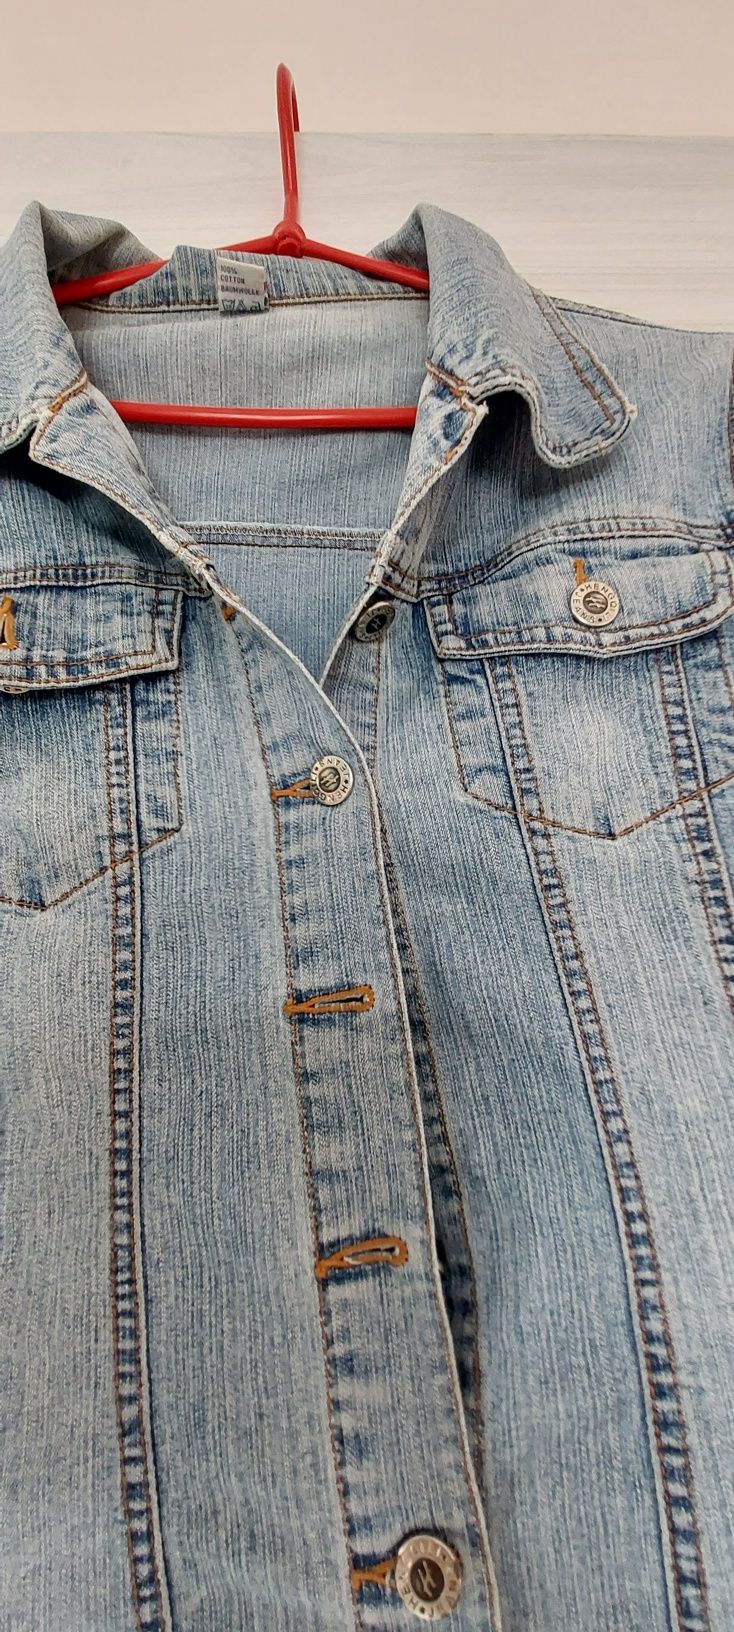 Katana S vintage jeansowa dżinsowe kurtka